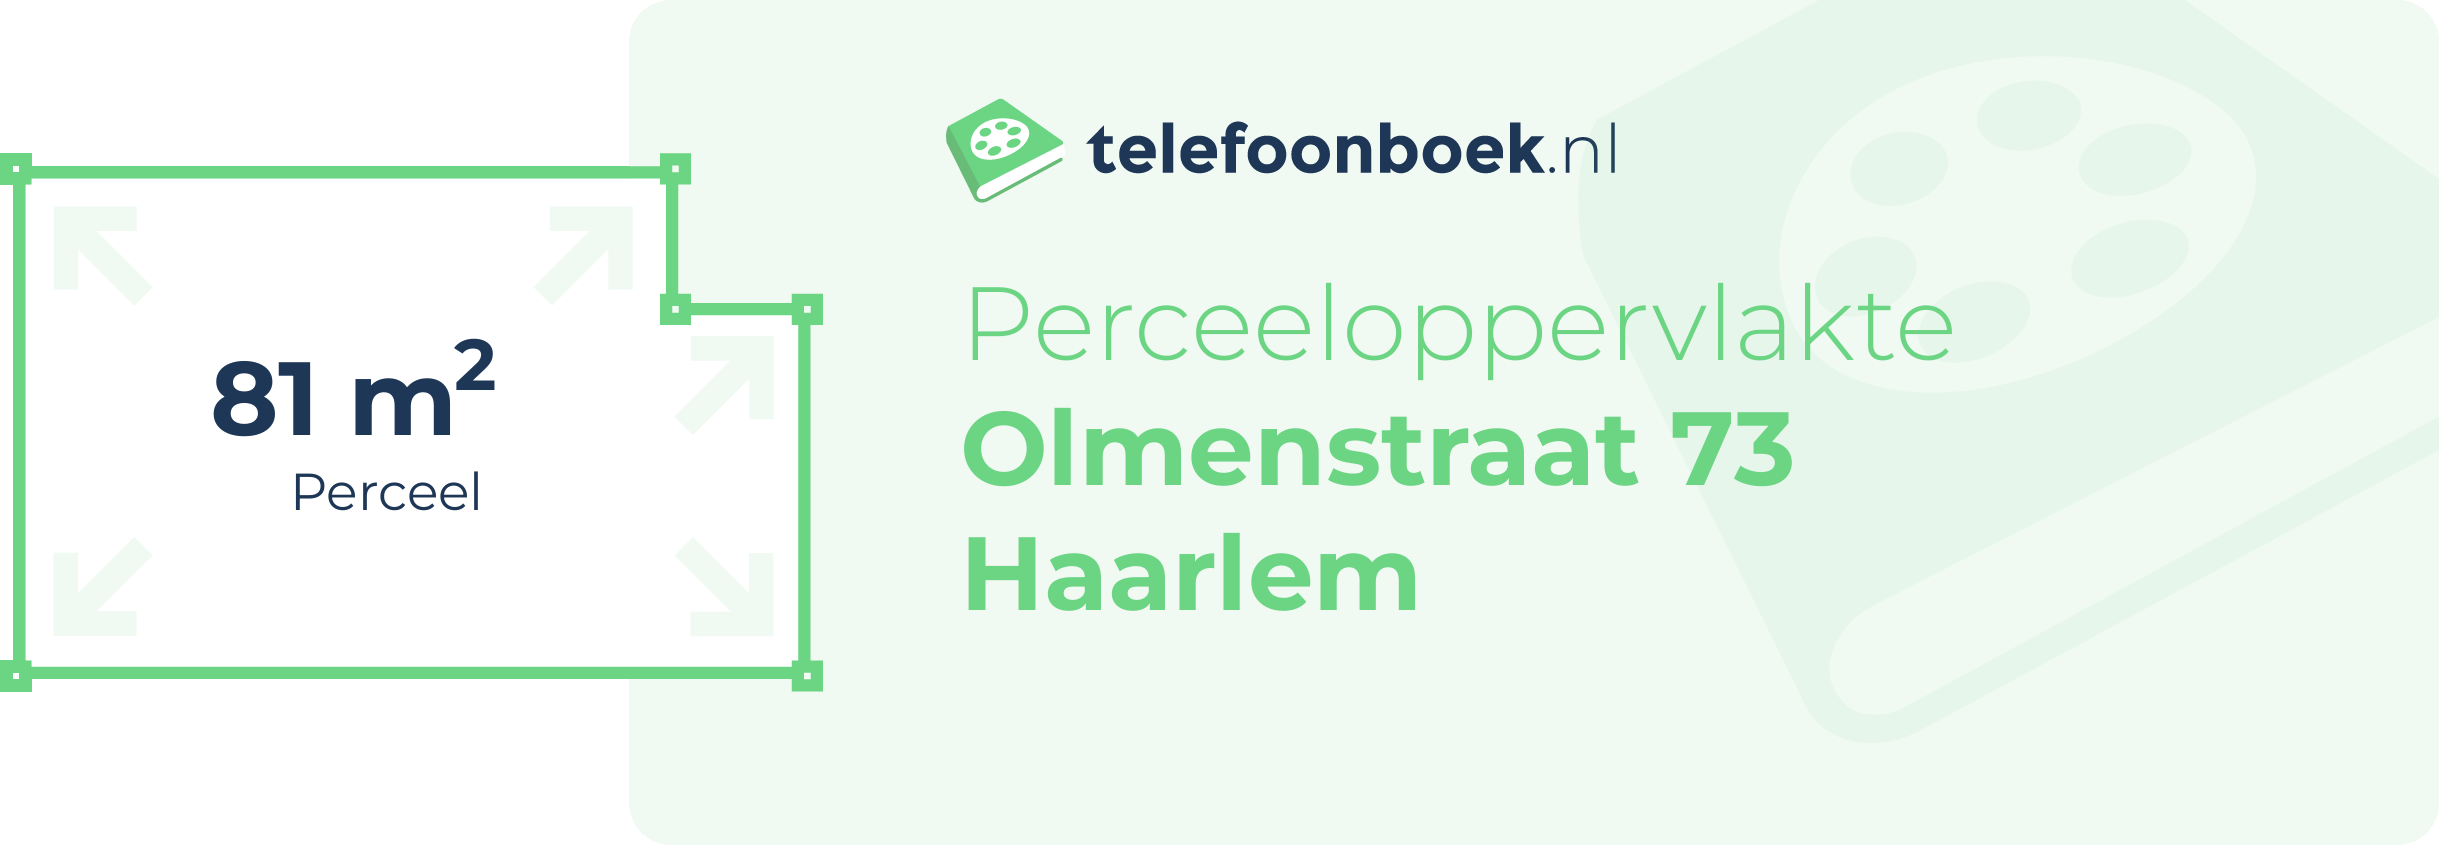 Perceeloppervlakte Olmenstraat 73 Haarlem